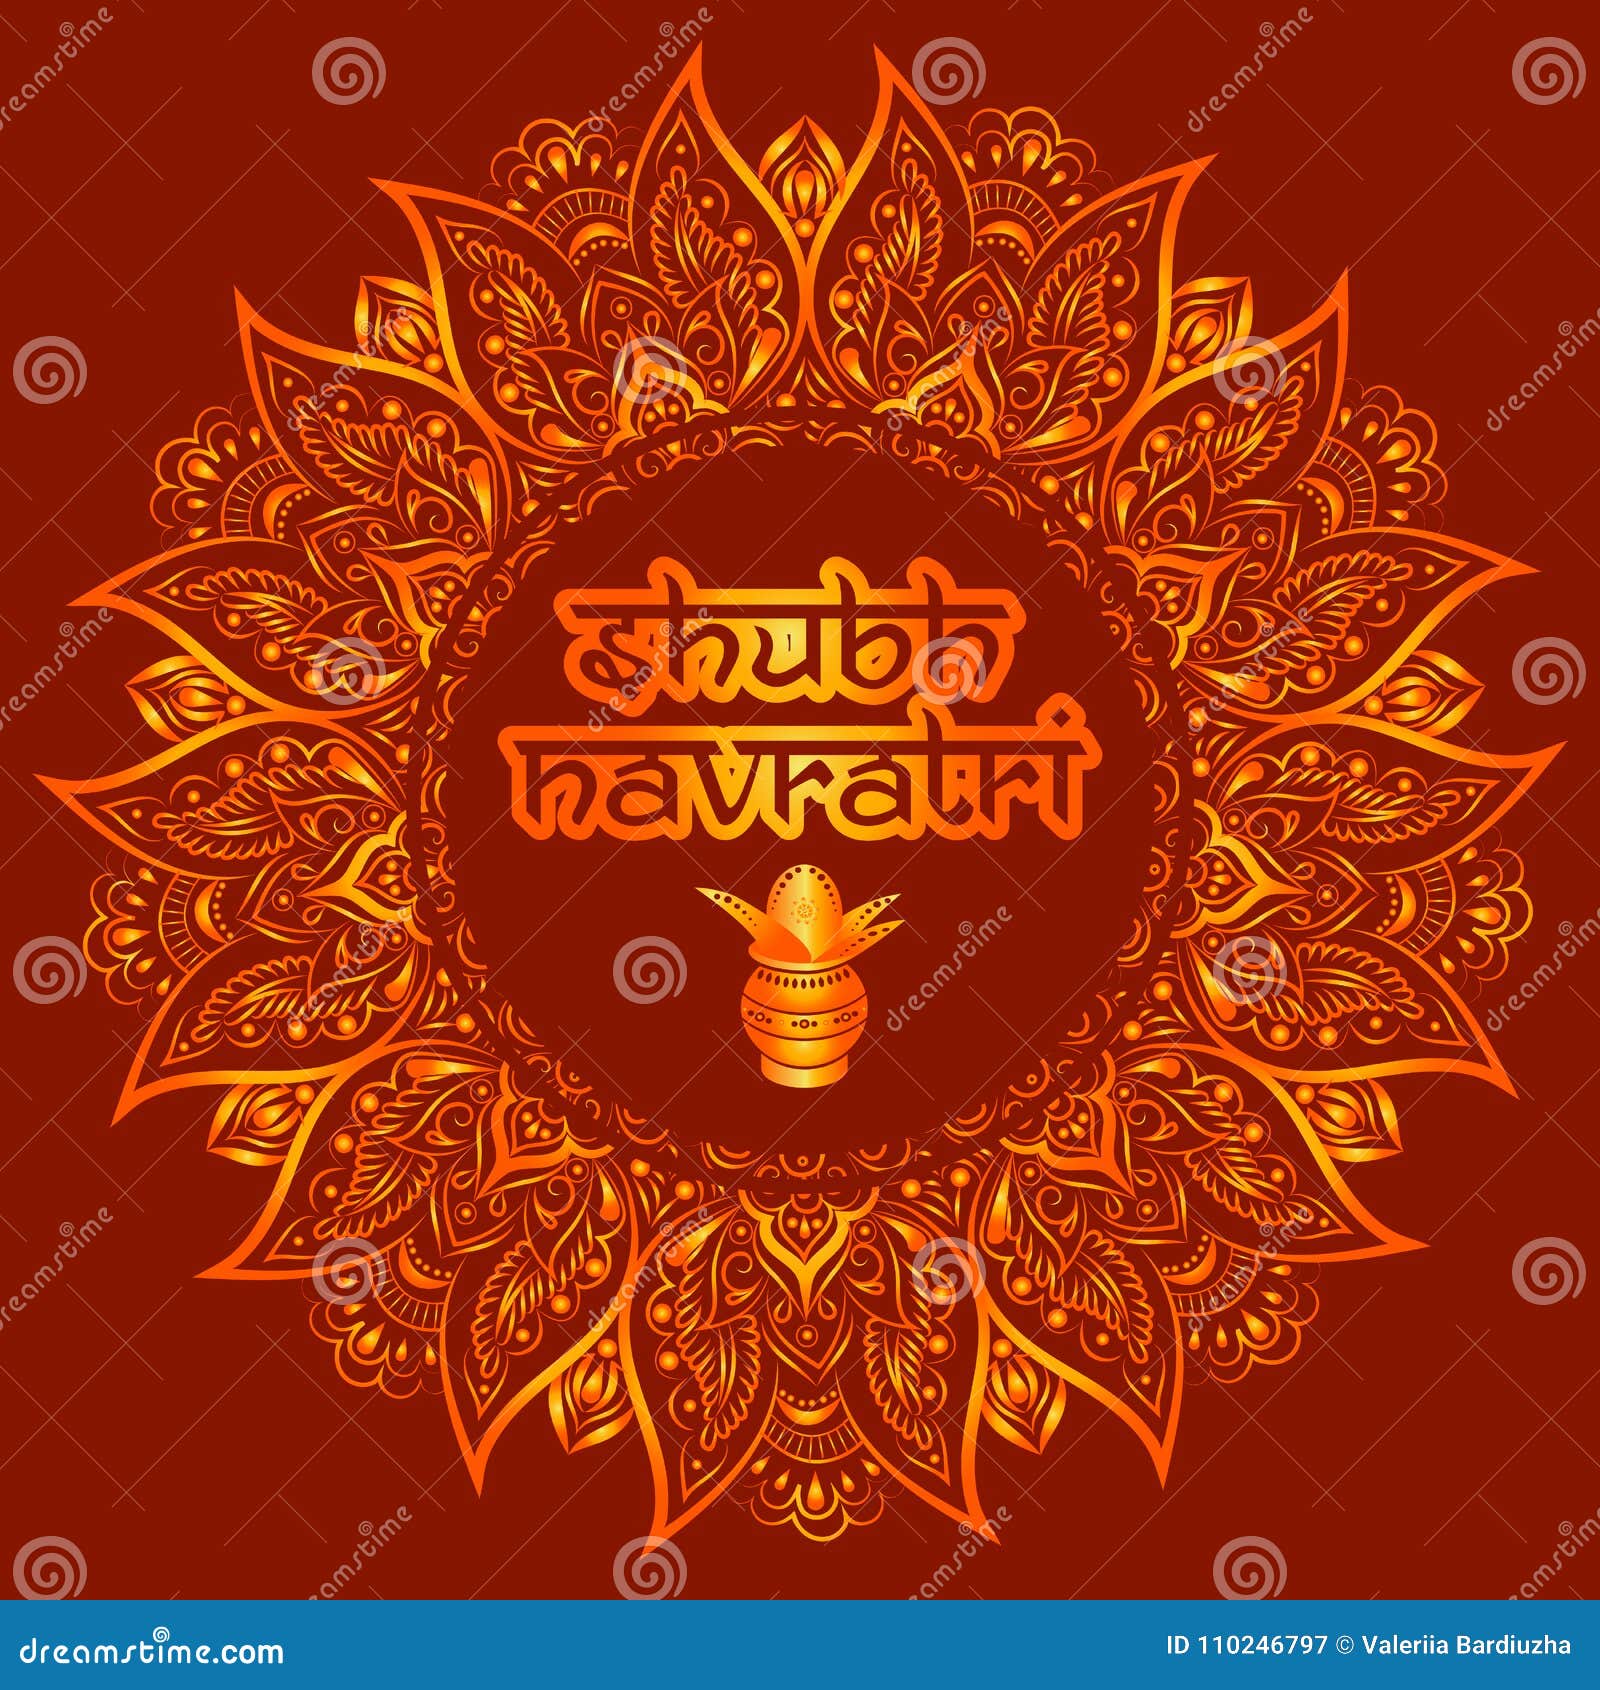 Illustration of Shubh Navratri Celebration Stock Vector - Illustration of  advertisement, hinduism: 110246797